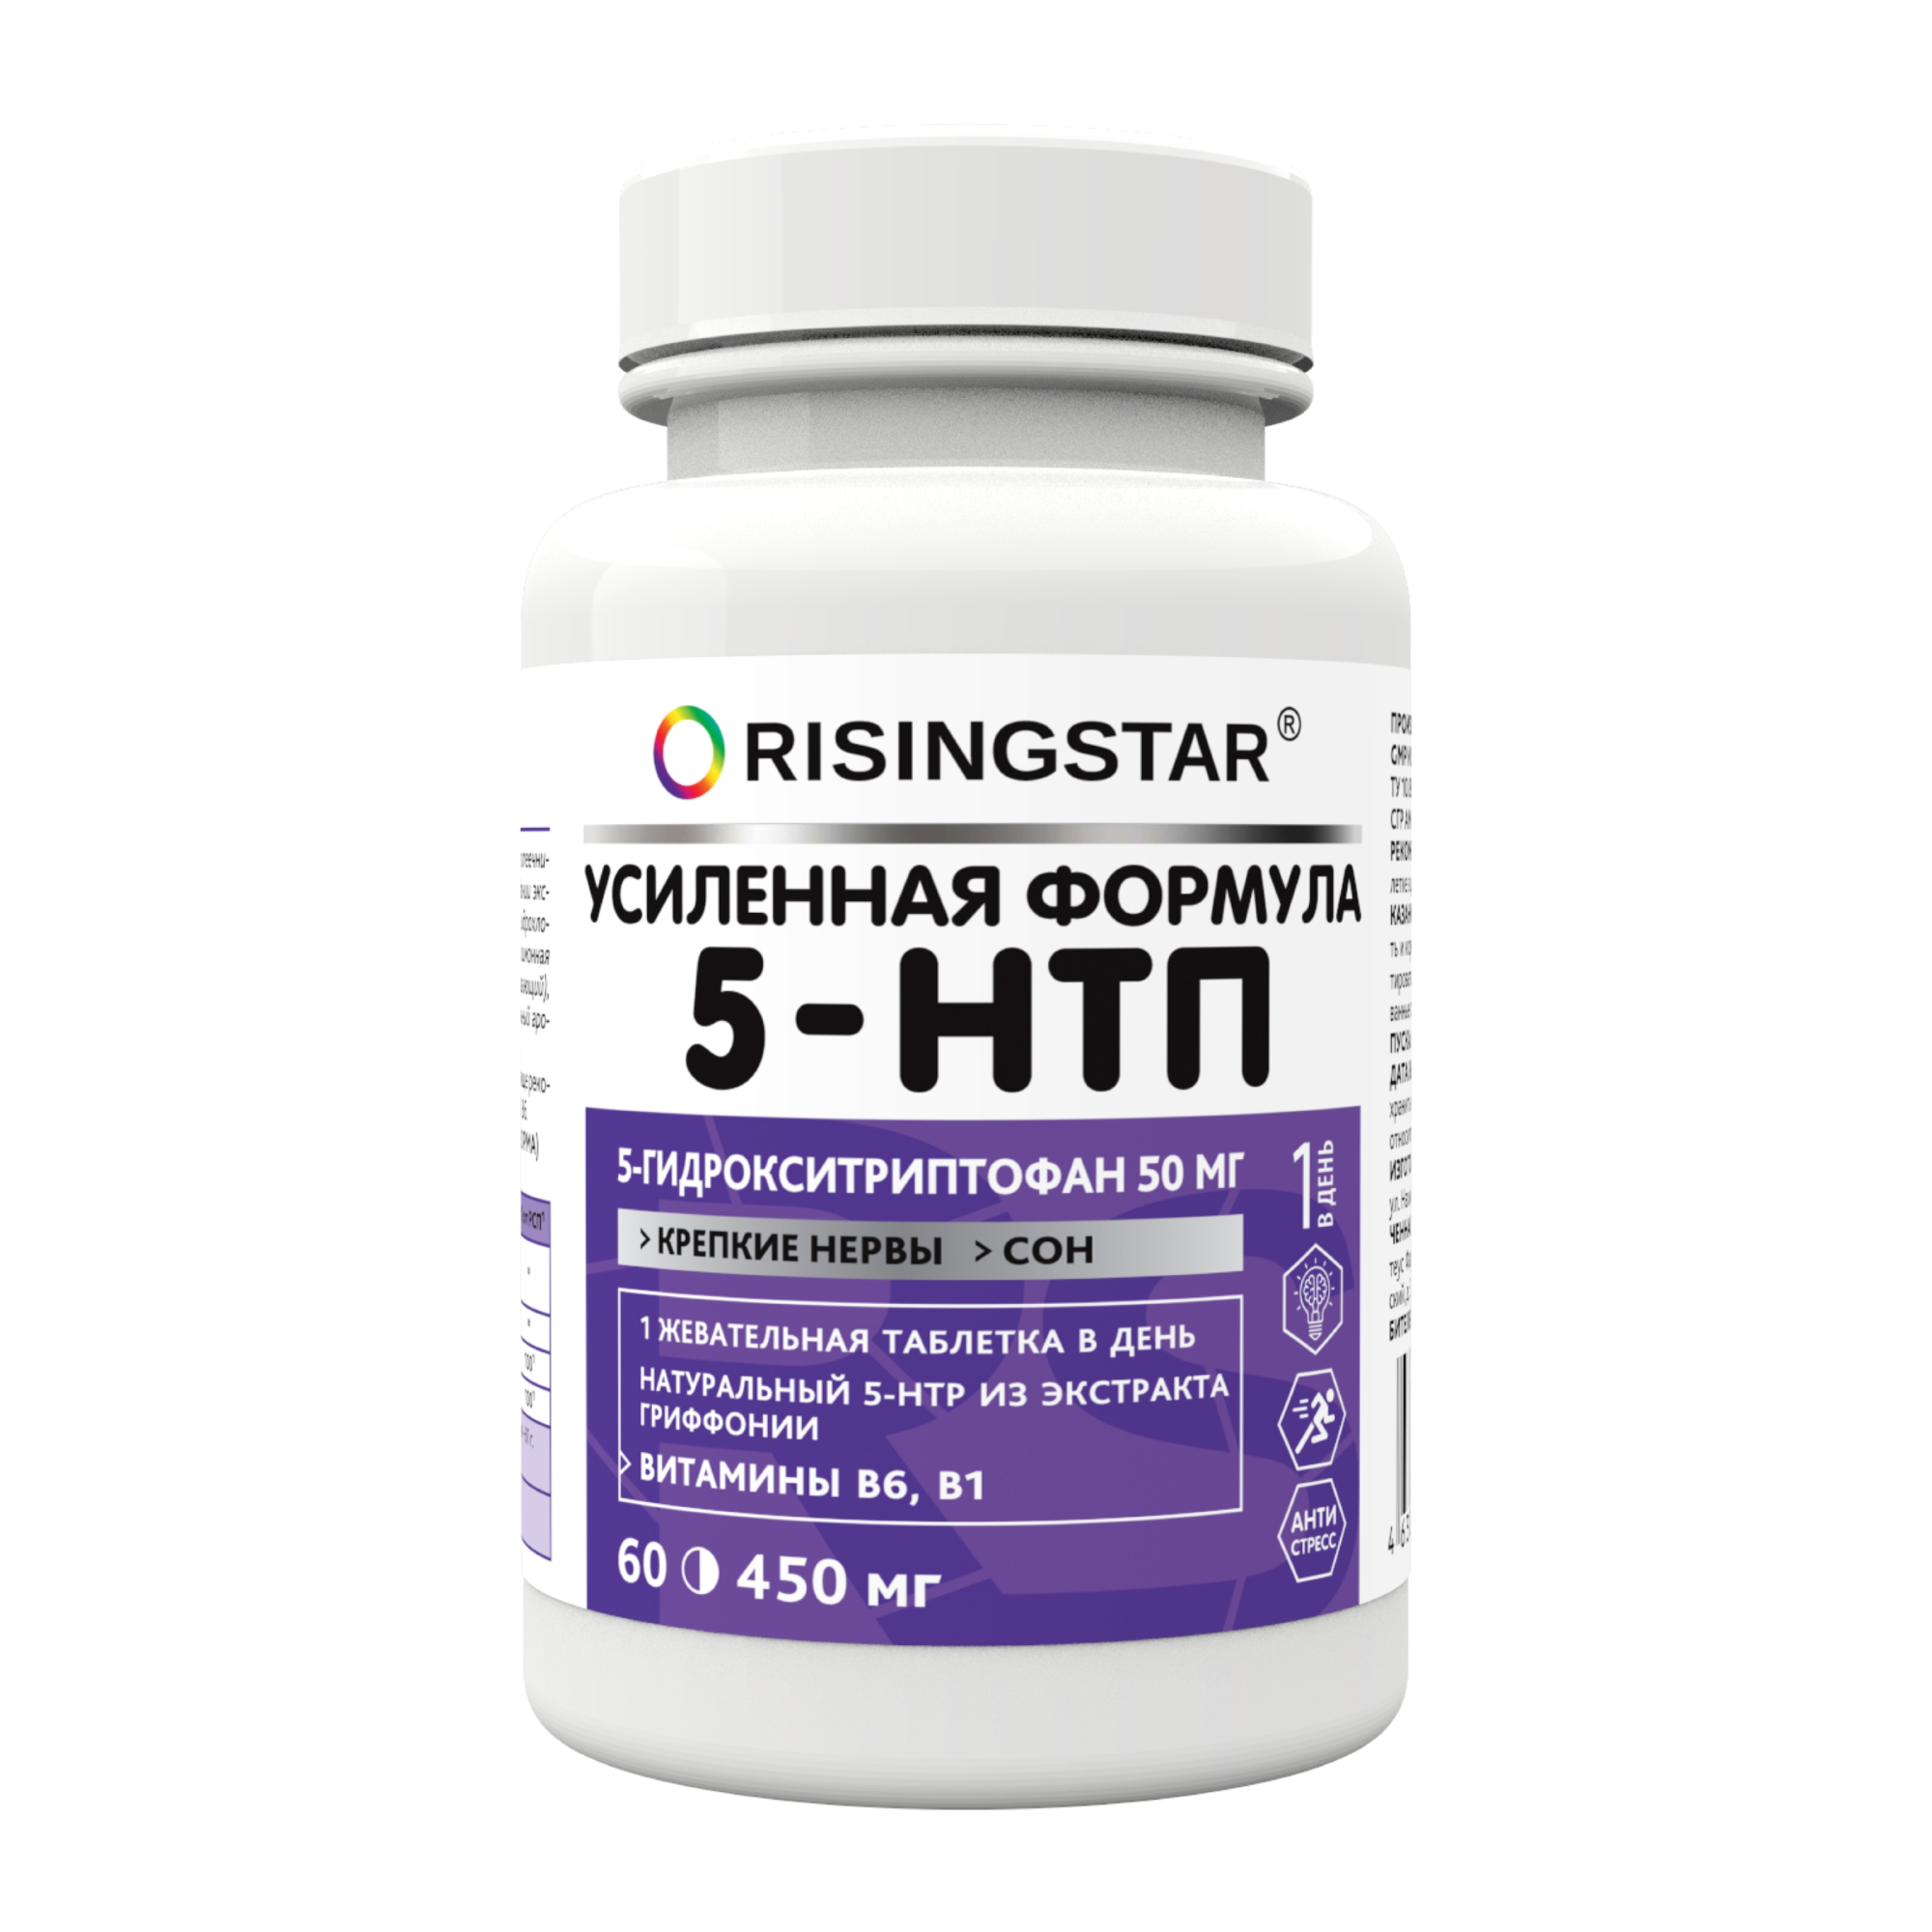 БАД Risingstar 5-htp альпиграс 60 таблеток, 60 г - фото 1